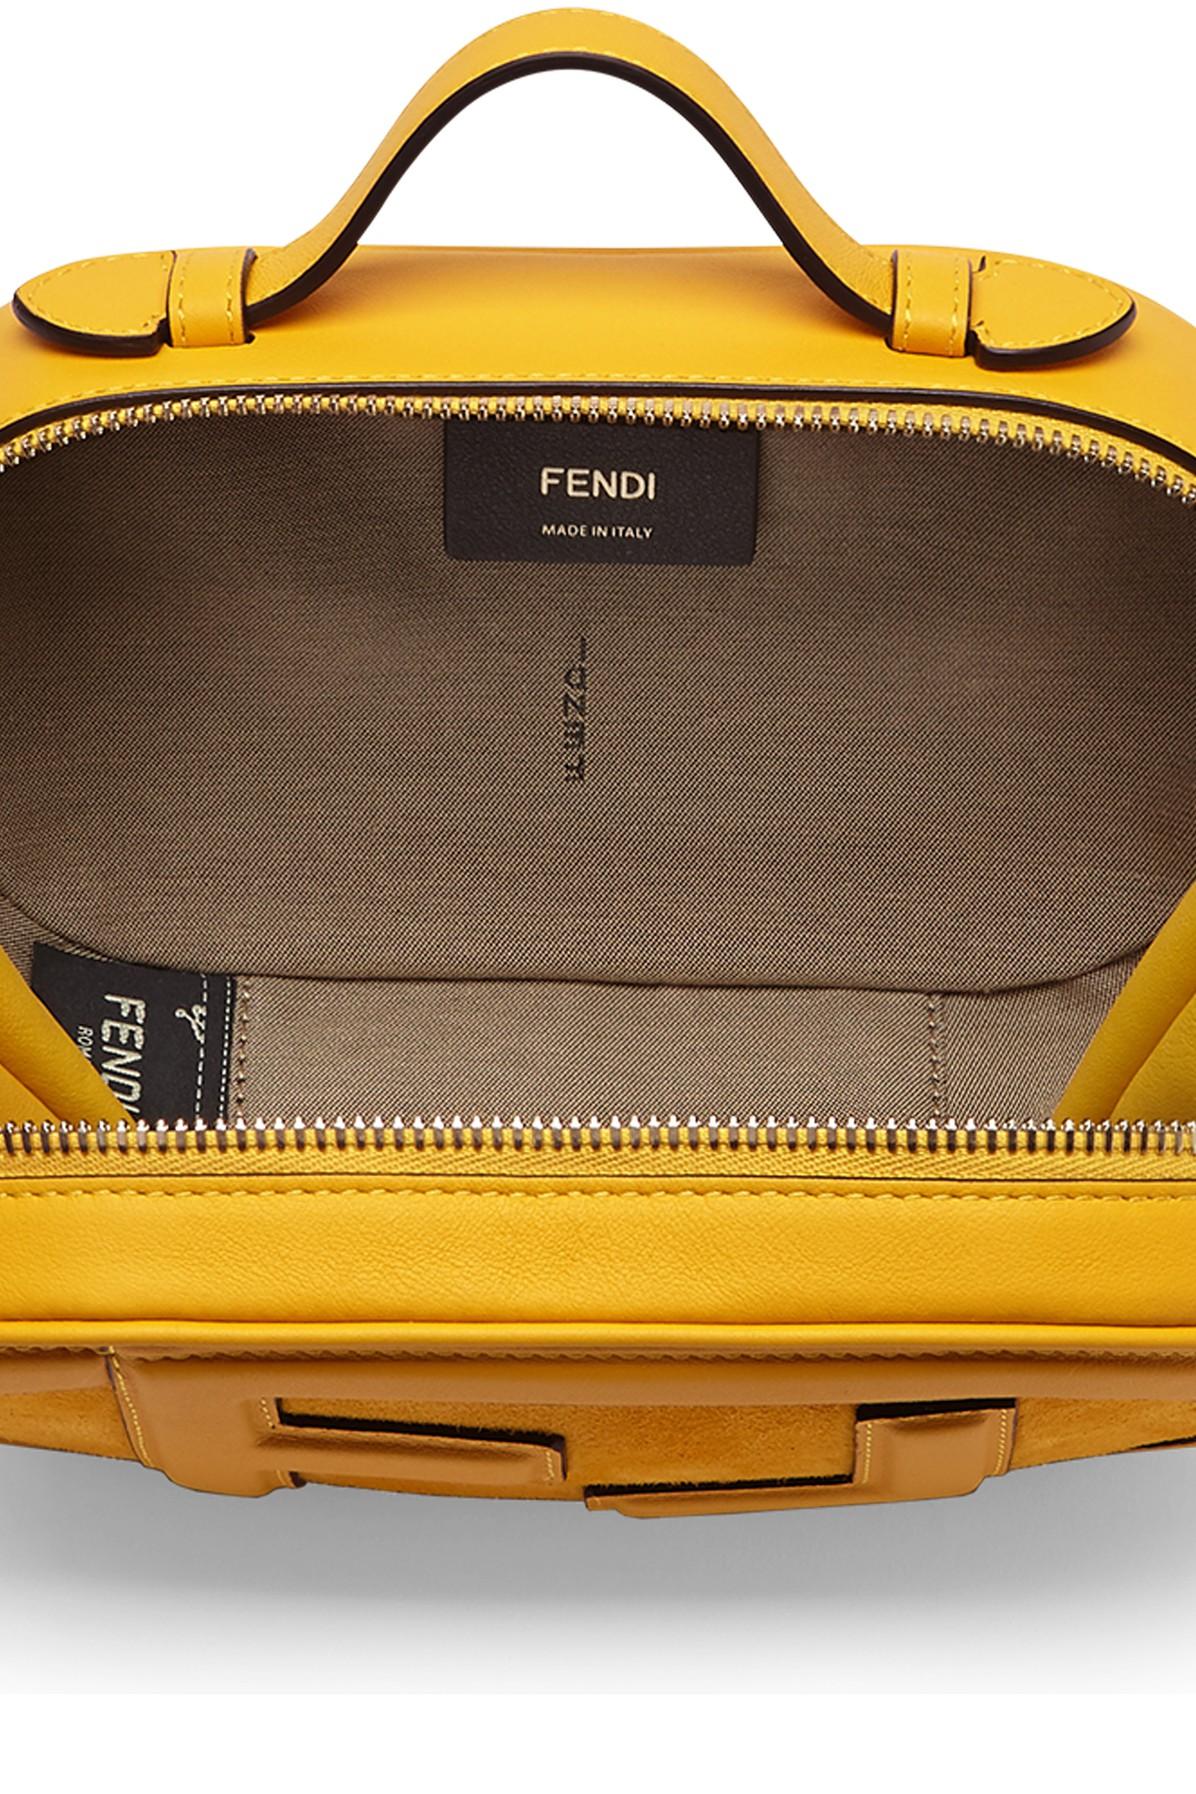 Fendi Mini Camera Case in Yellow | Lyst